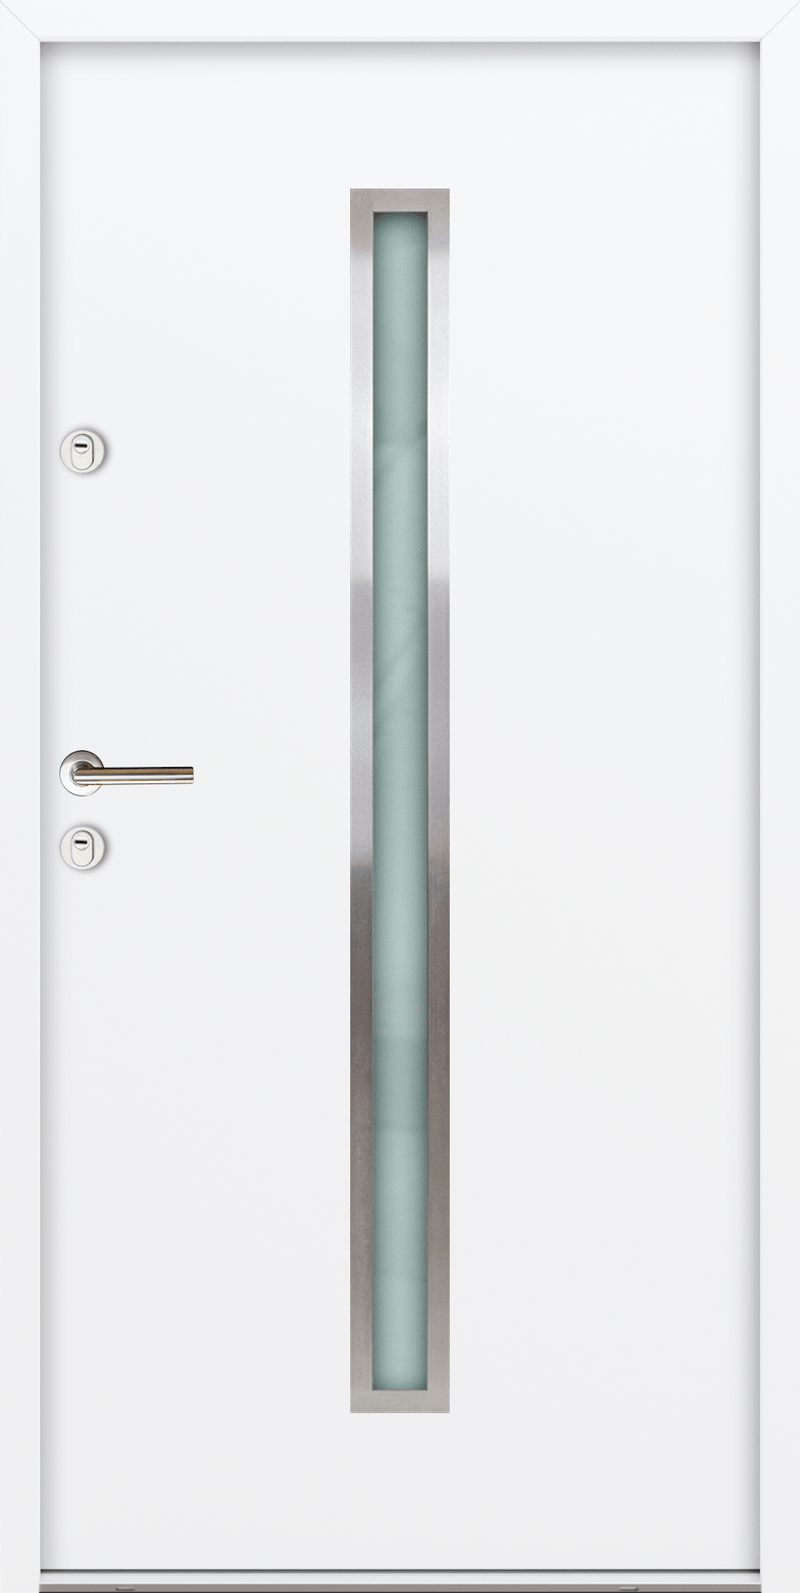 Turenwerke ATU 68 Design 501 Steel Door - White